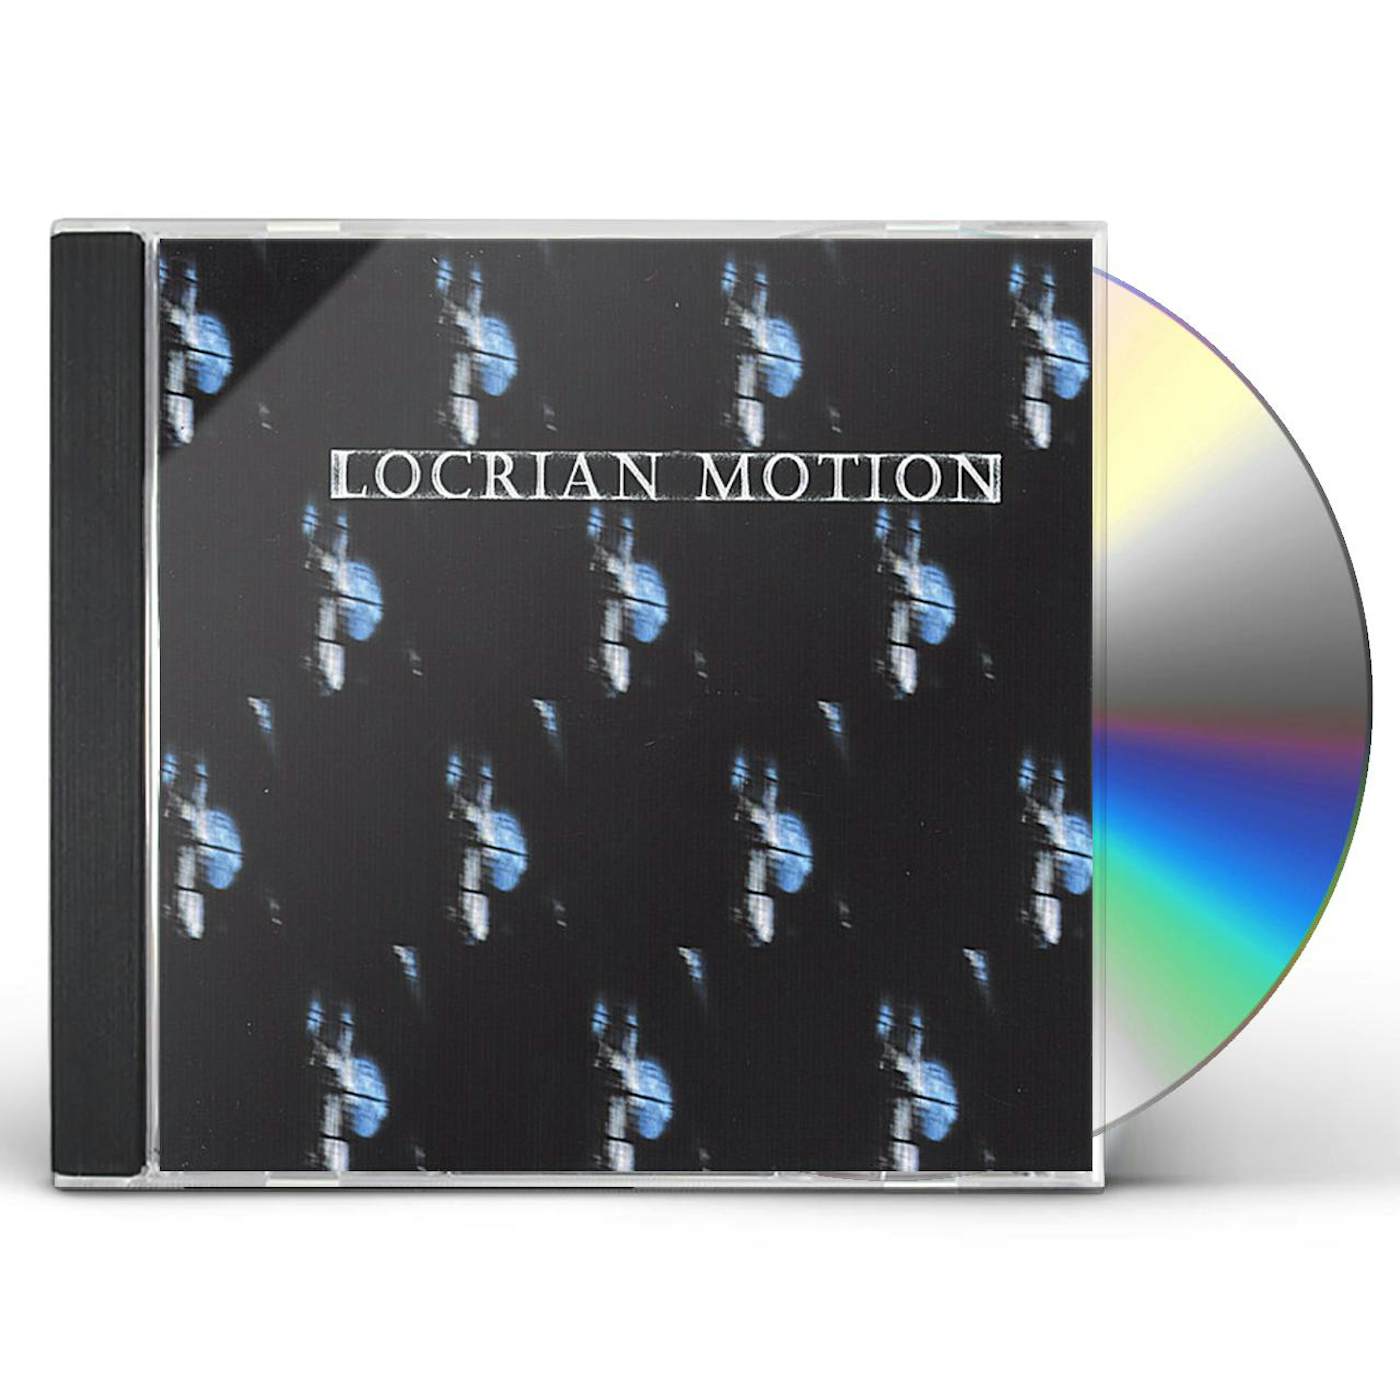 Bam LOCRIAN MOTION CD